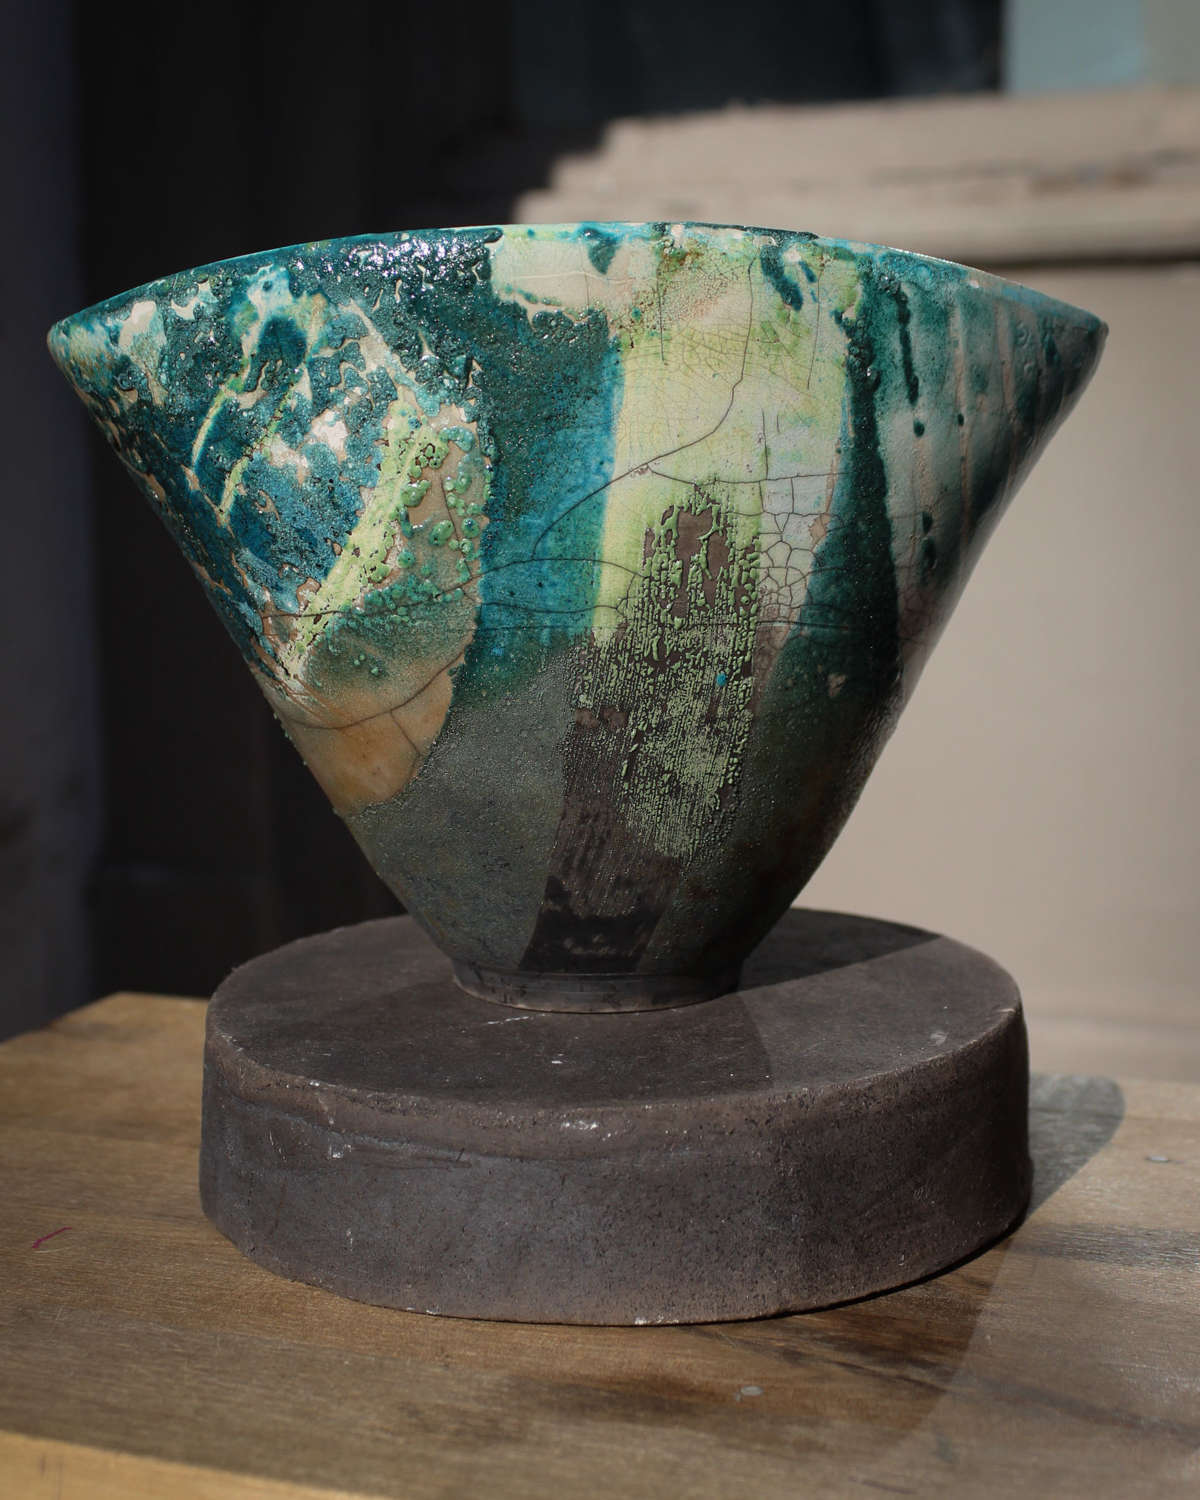 Seagreen Ceramic by Gillian Clarke